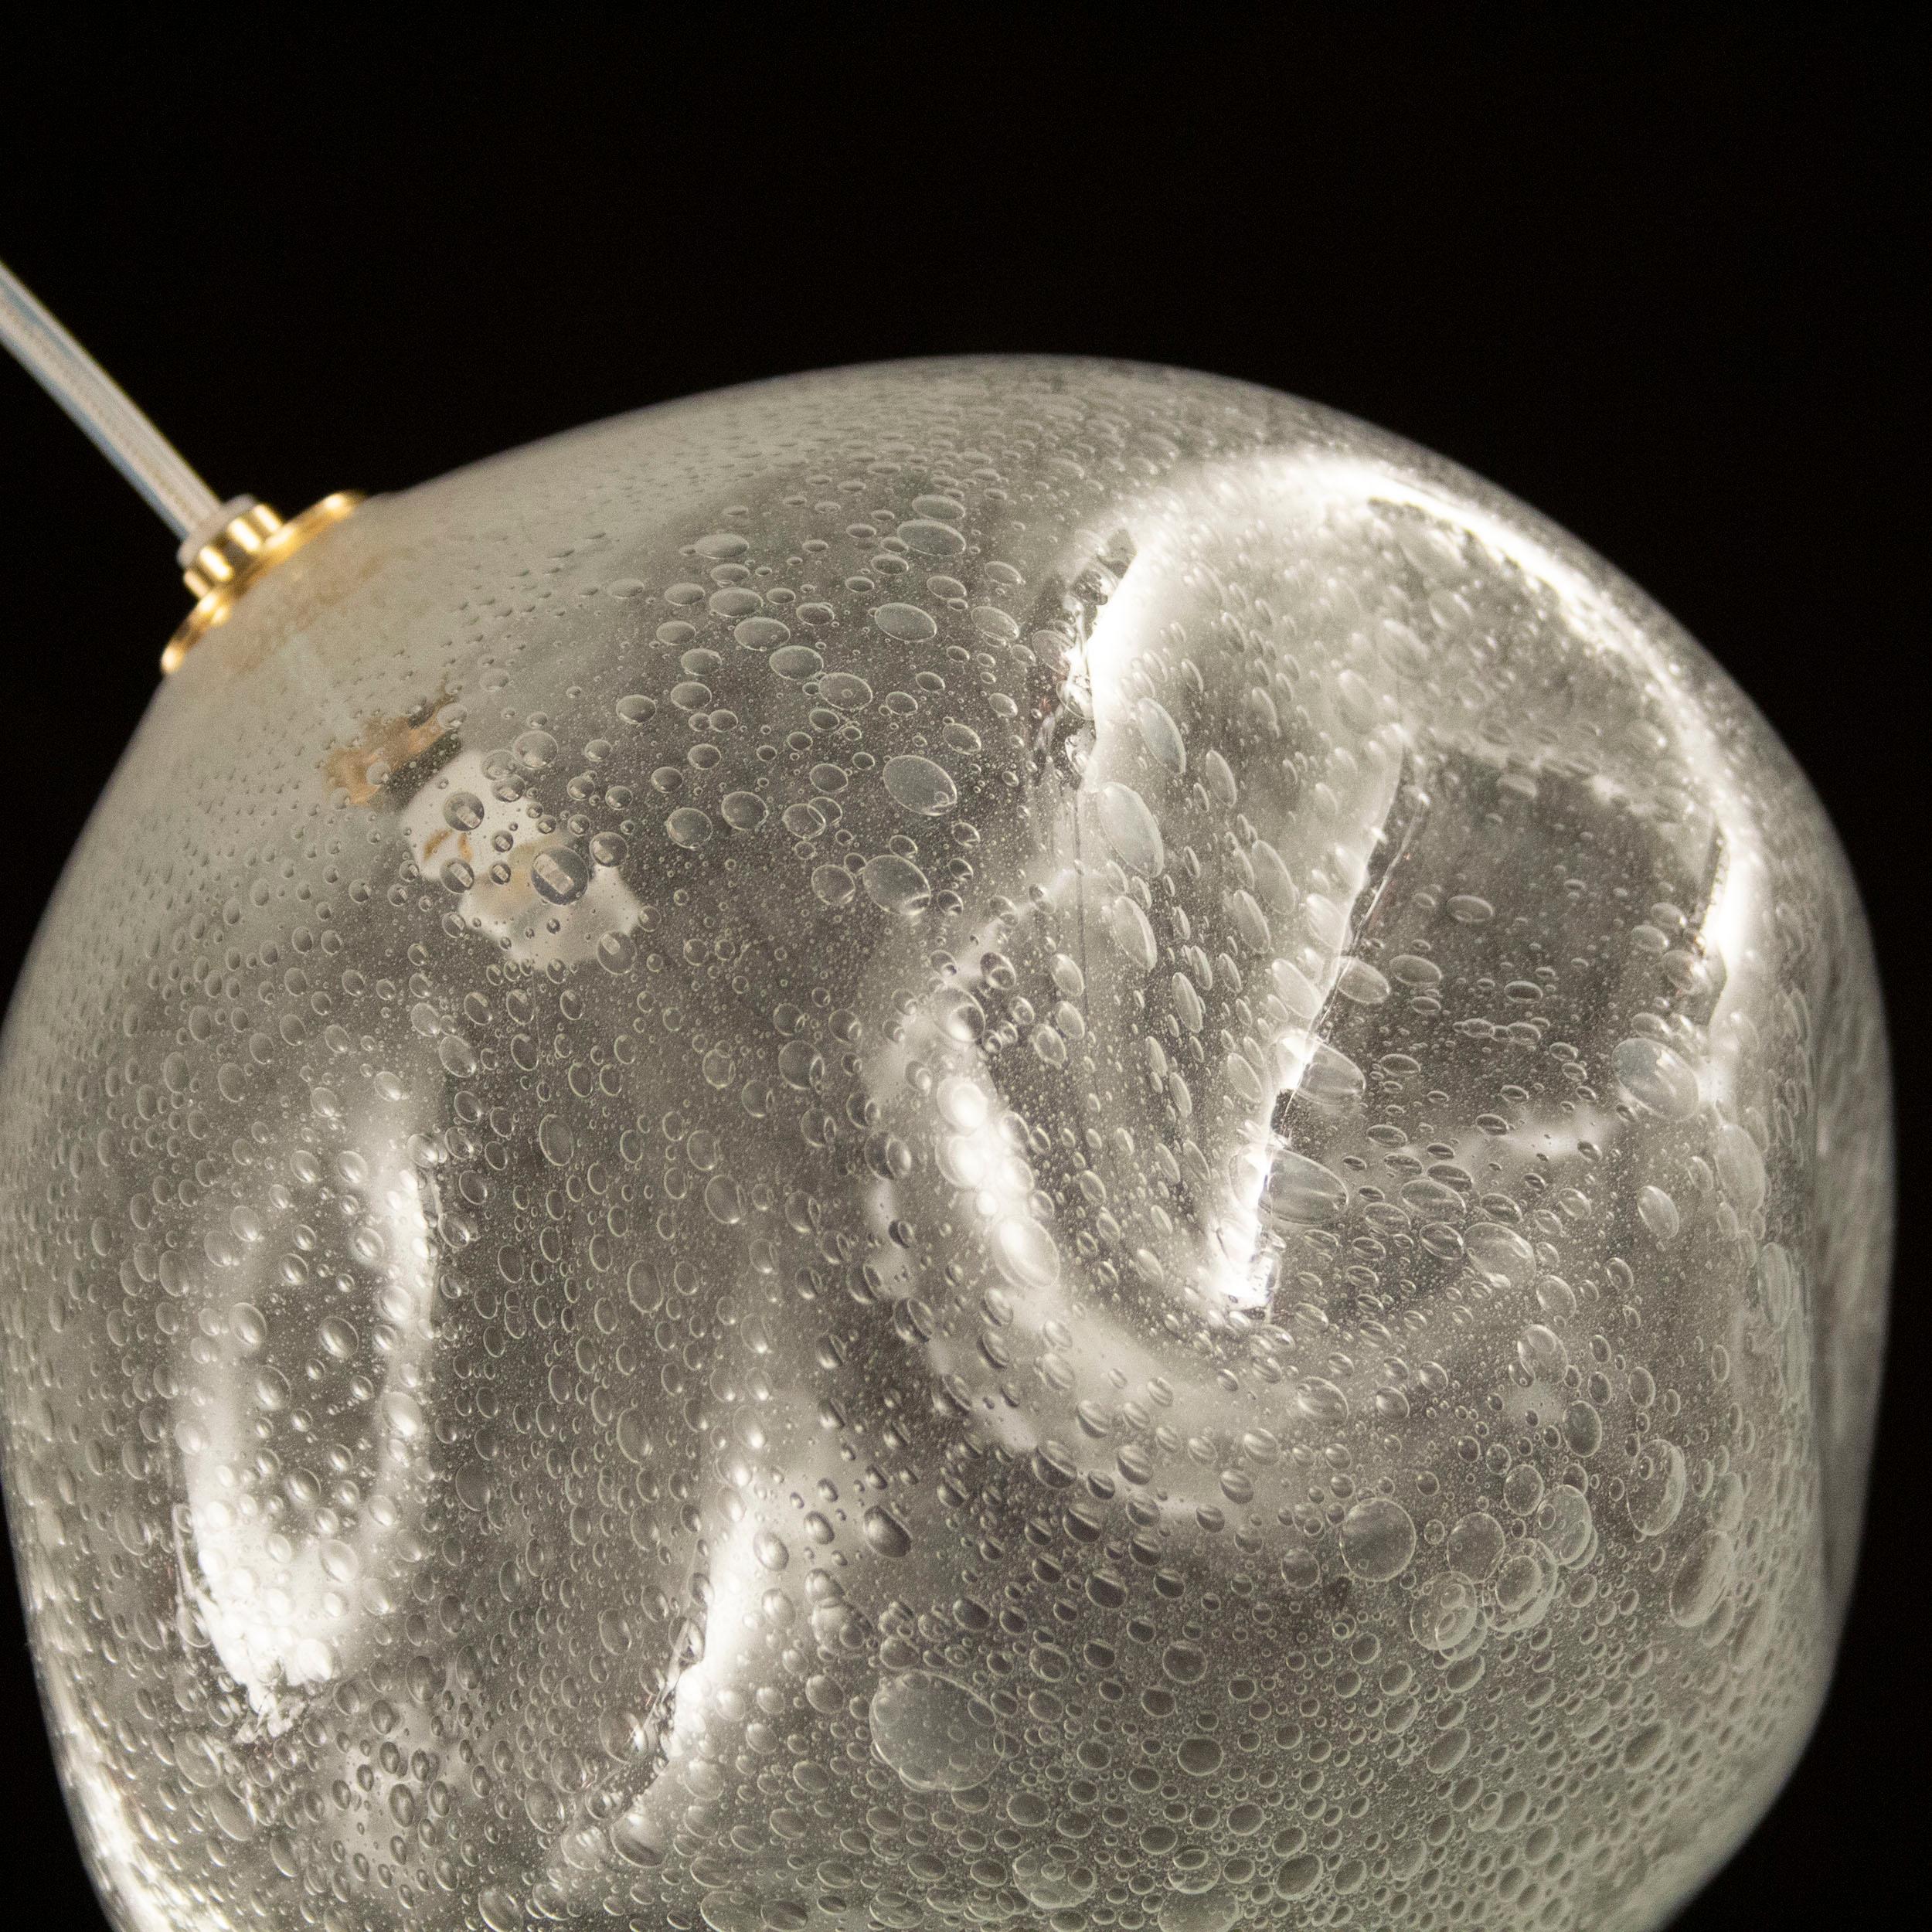 Other Artistic Suspension 1 Light, Sphere Bubble Murano Glass Desafinado by Multiforme For Sale